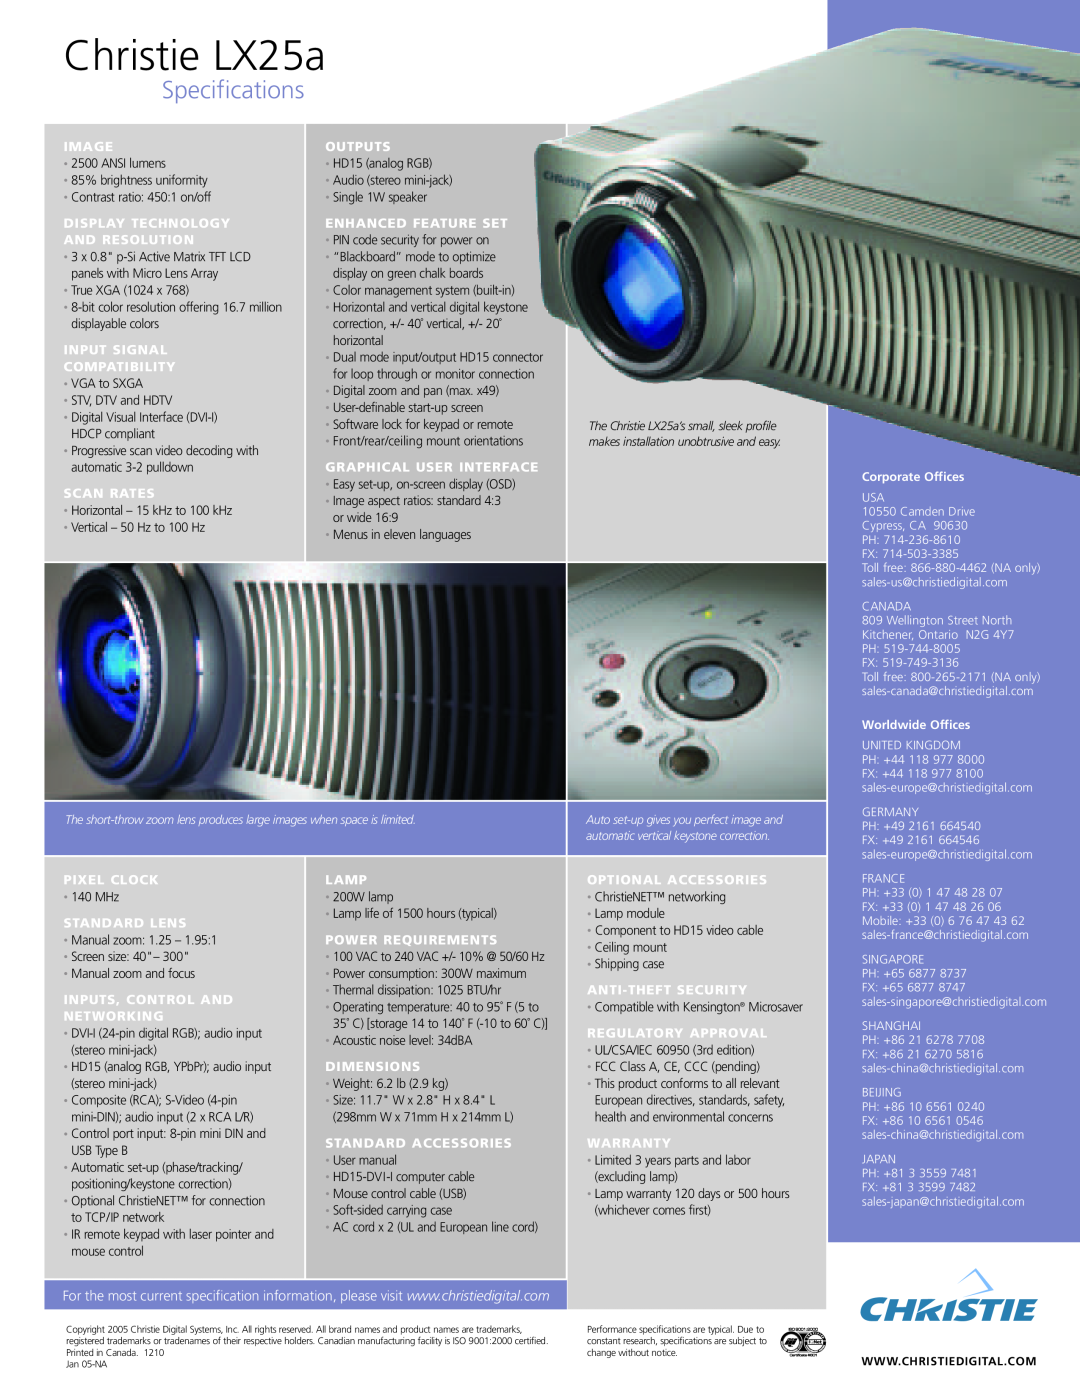 Christie Digital Systems Christie LX25a, Specifications, ANSI lumens, 85% brightness uniformity, Single 1W speaker 